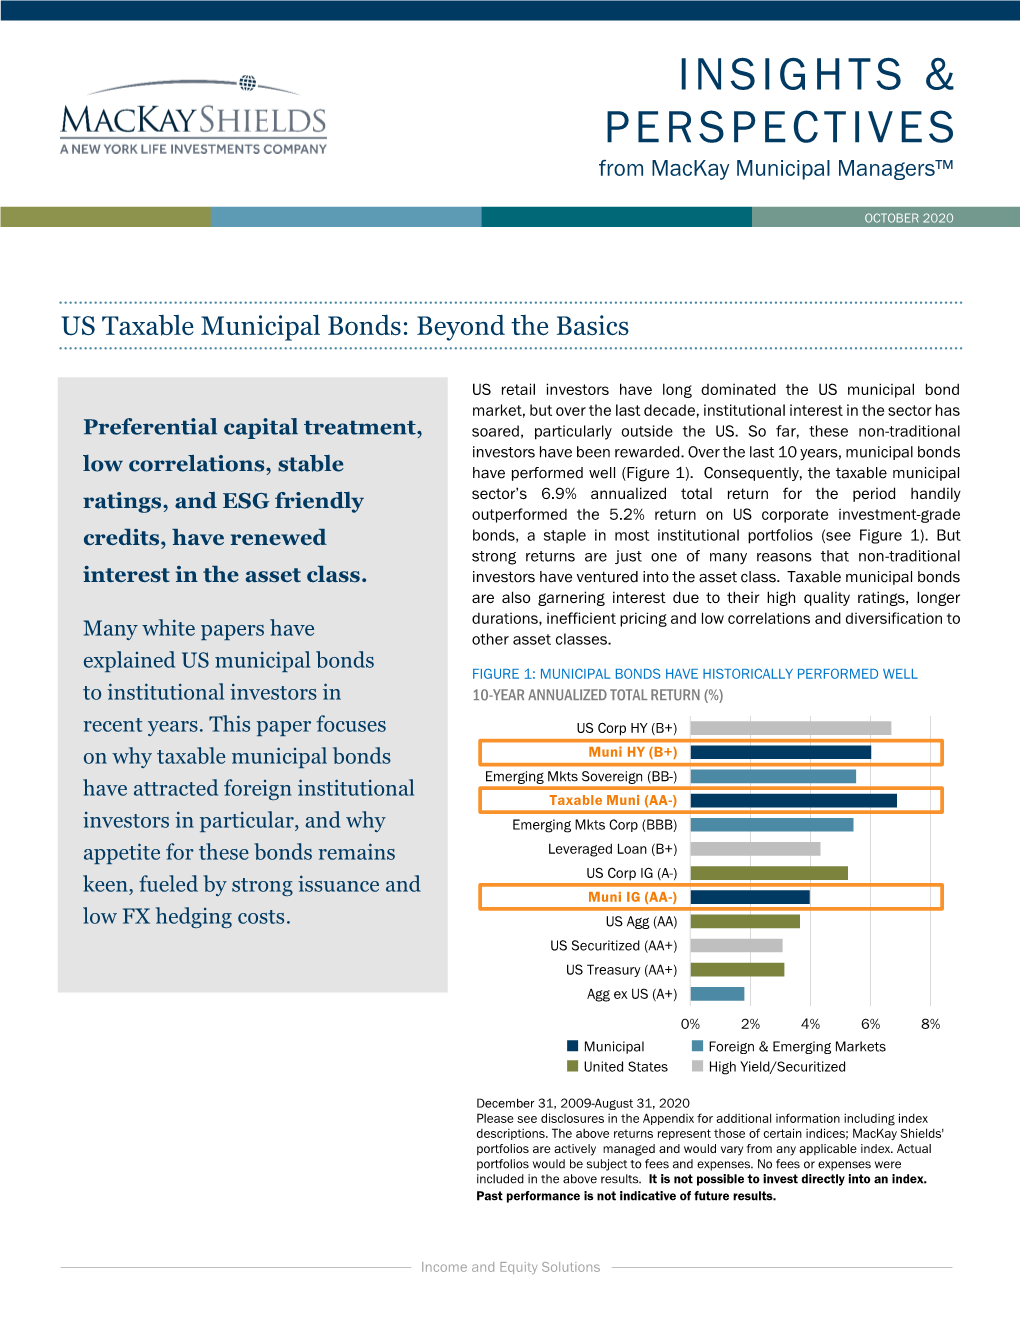 U.S. Taxable Municipal Bonds: Beyond the Basics